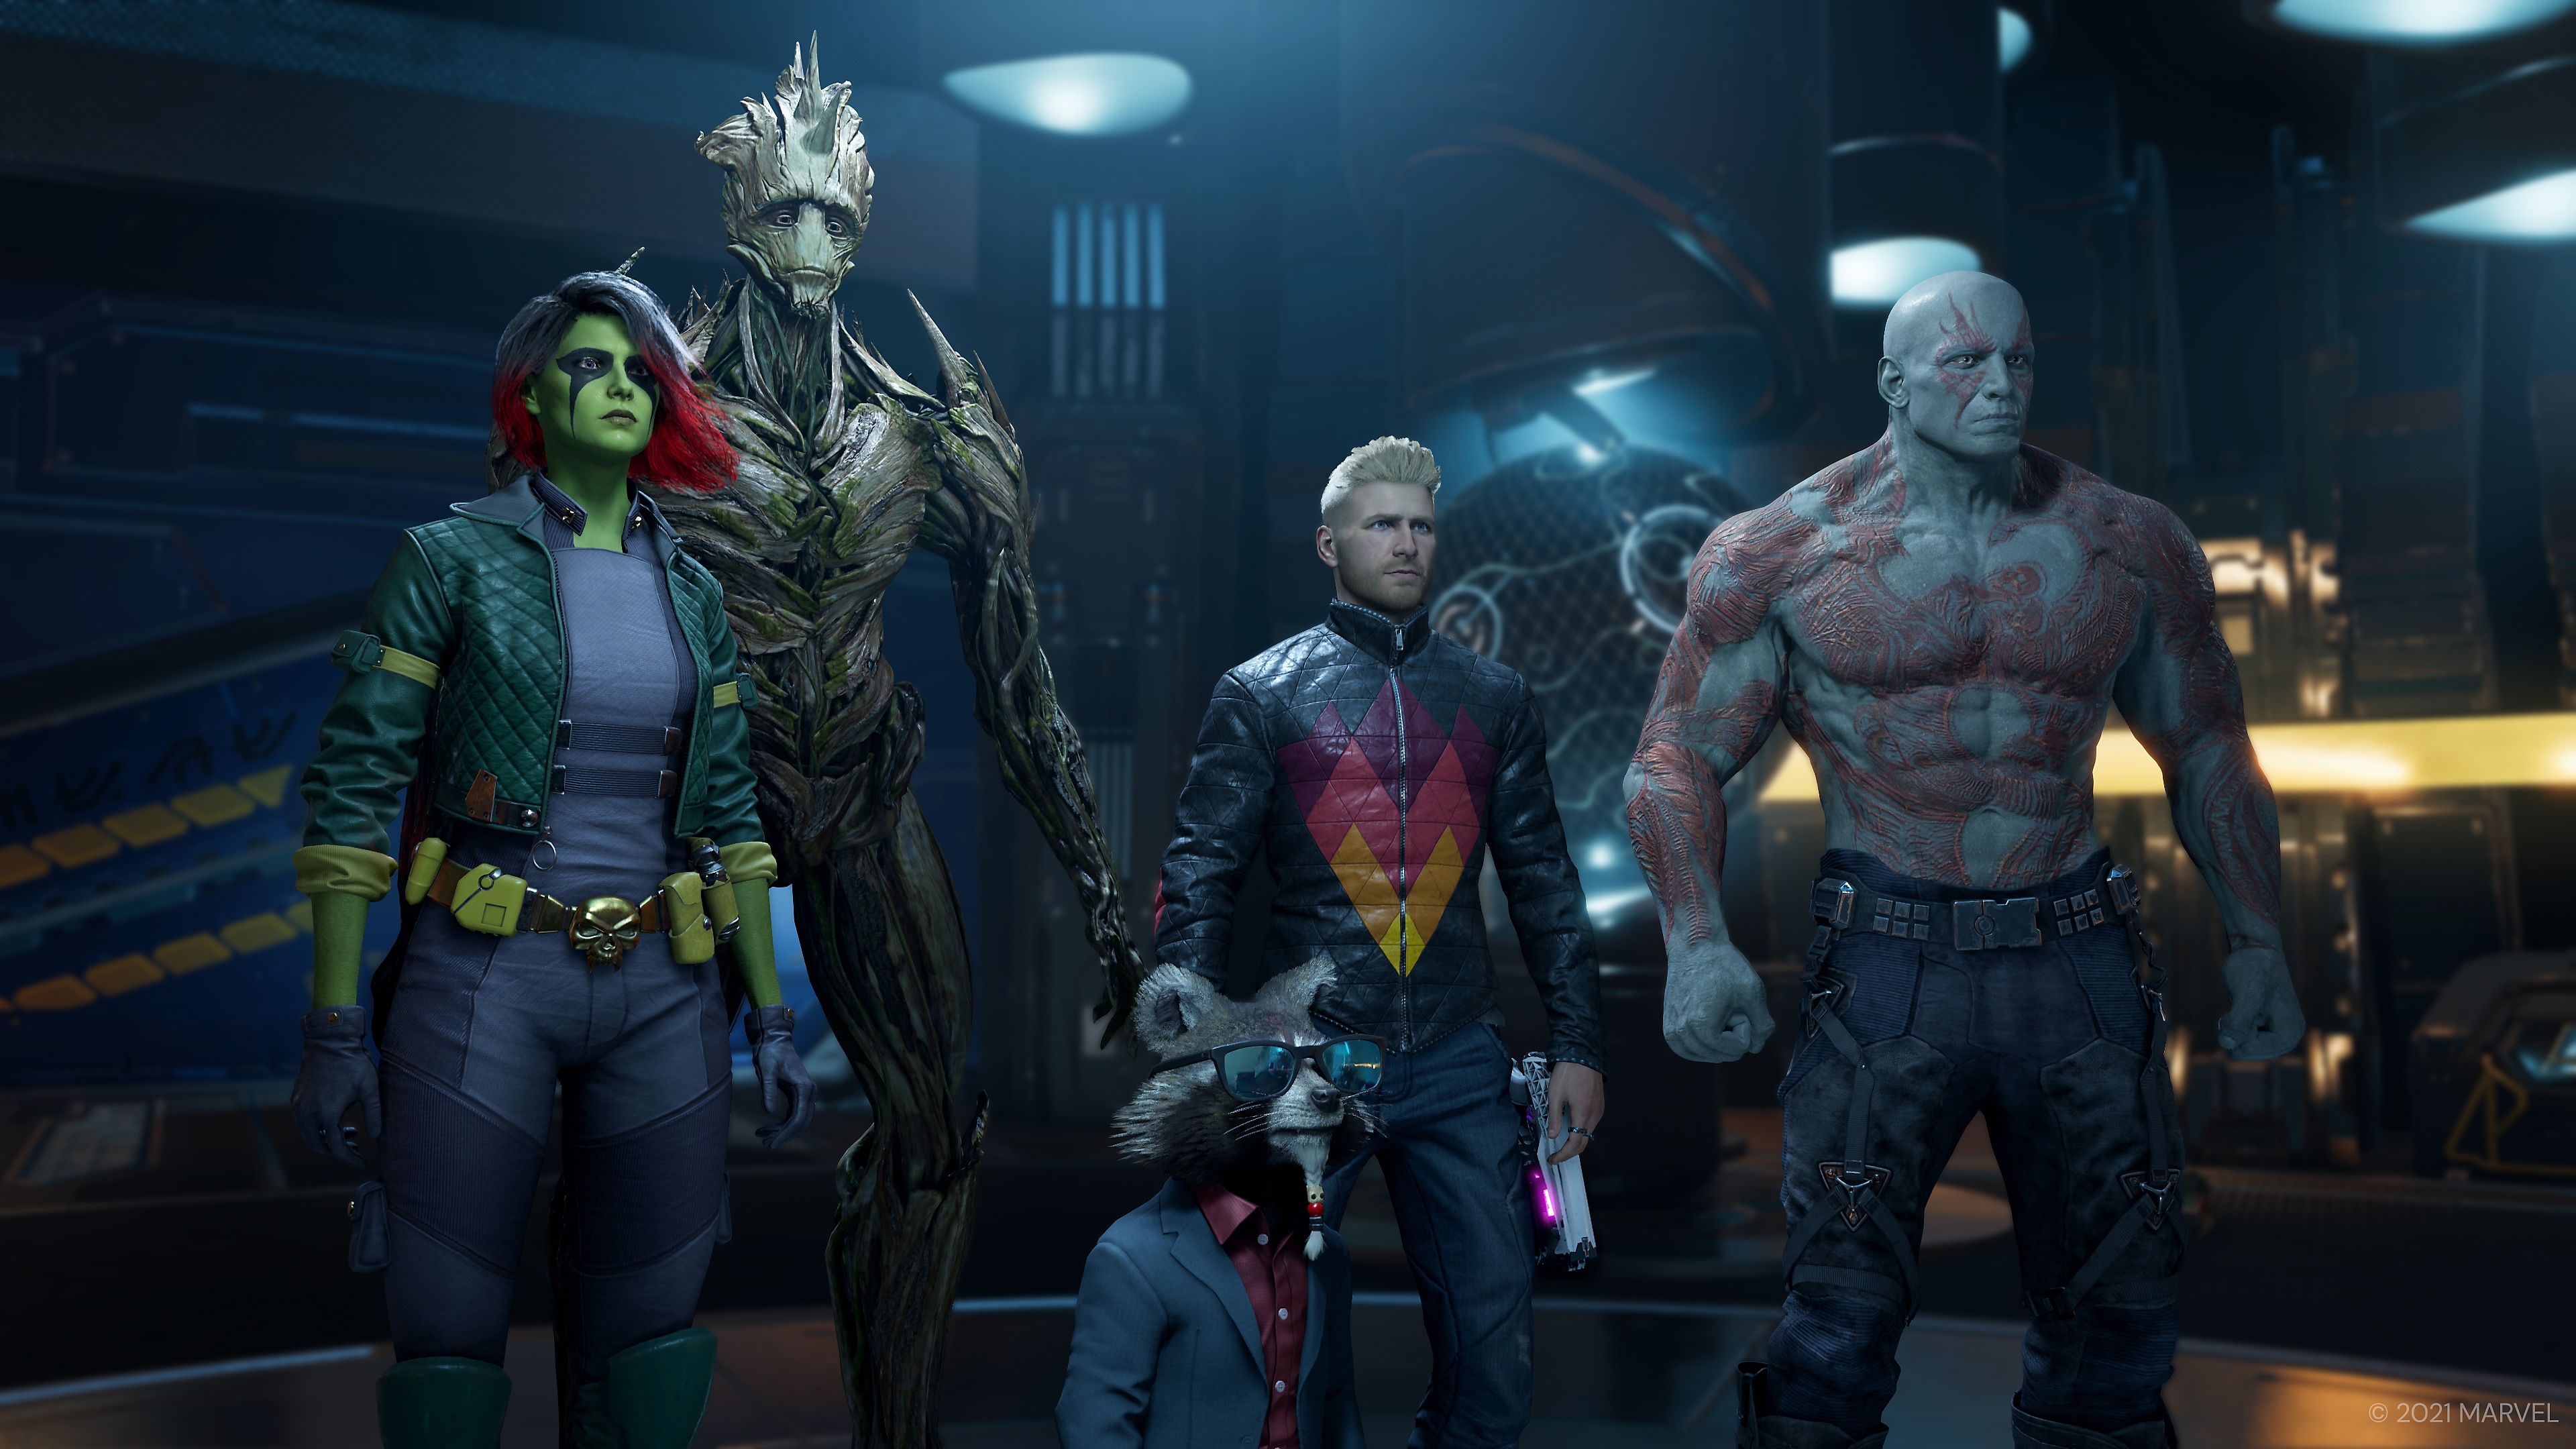 Marvel's Guardians of the Galaxy – снимок экрана